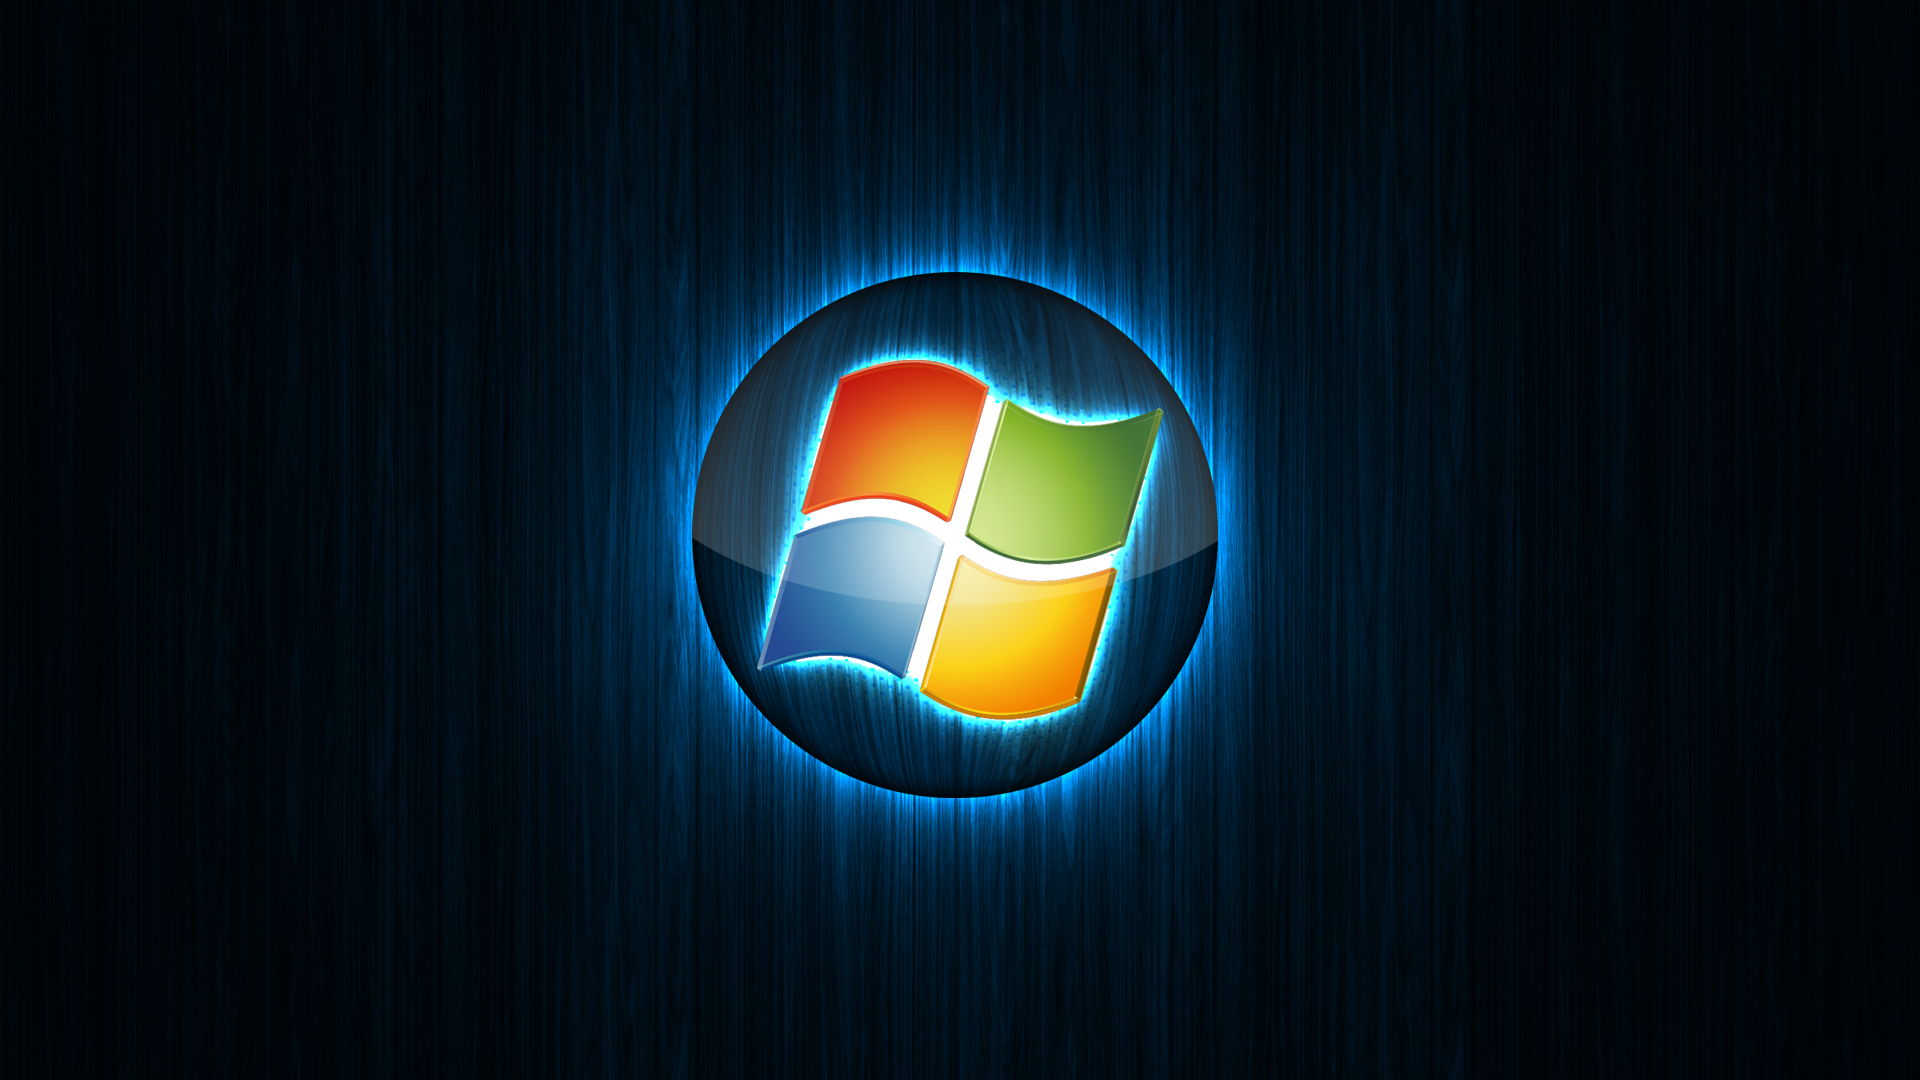 Unique Windows 10 Logo Wallpapers - Wallpaper Cave